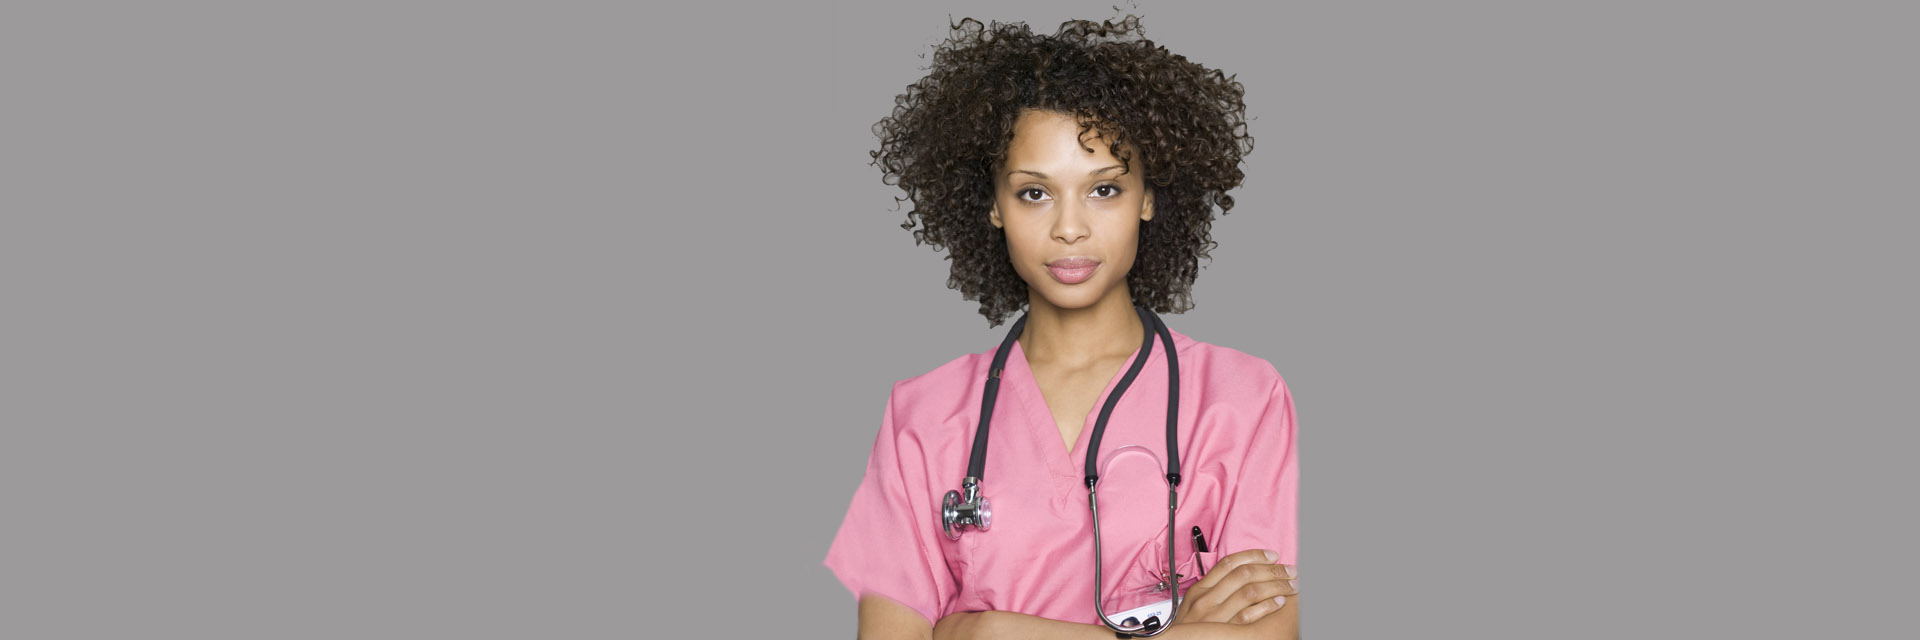 Nurse in pink scrubs